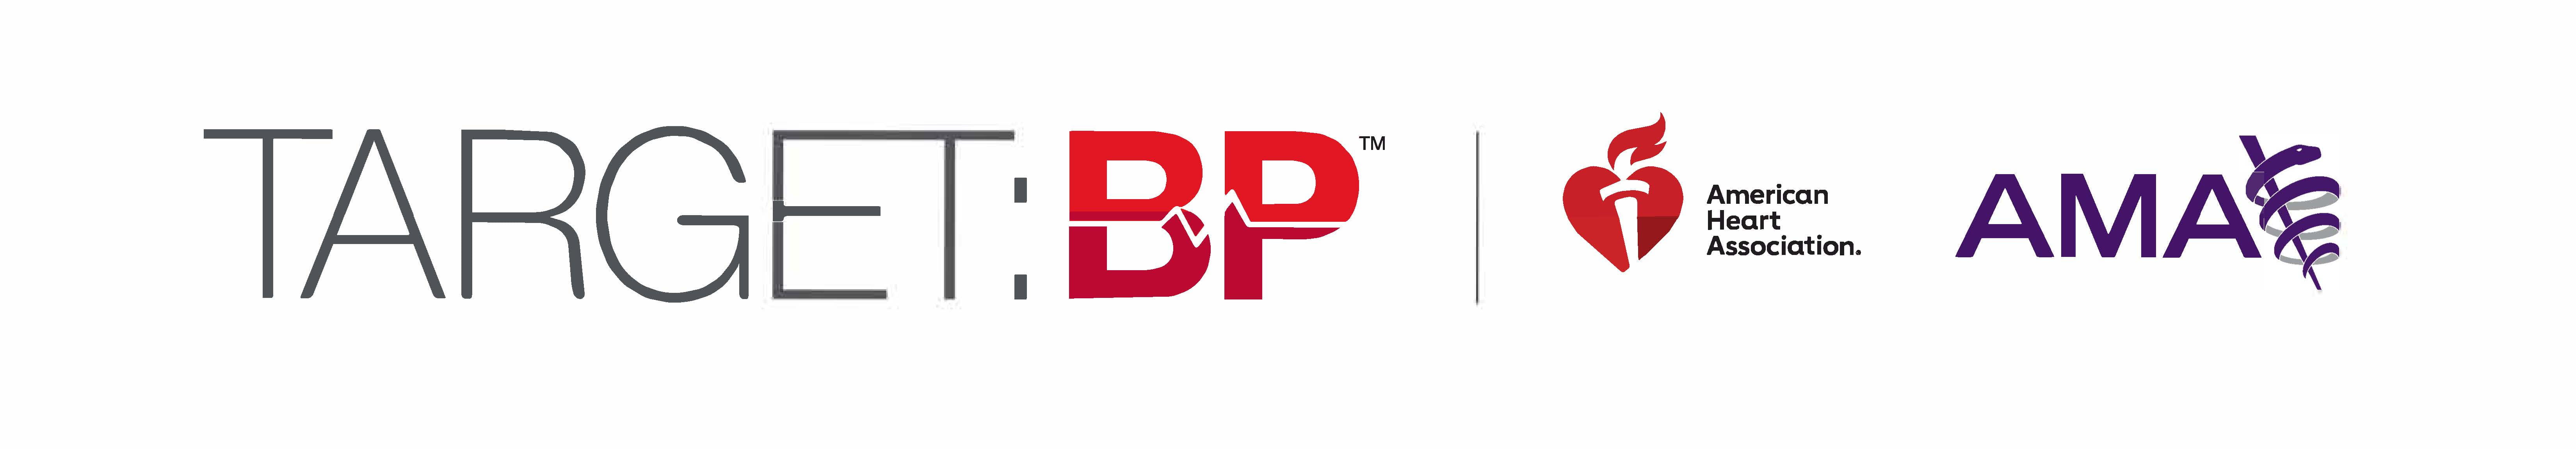 Target: BP AHA AMA logo horizontal